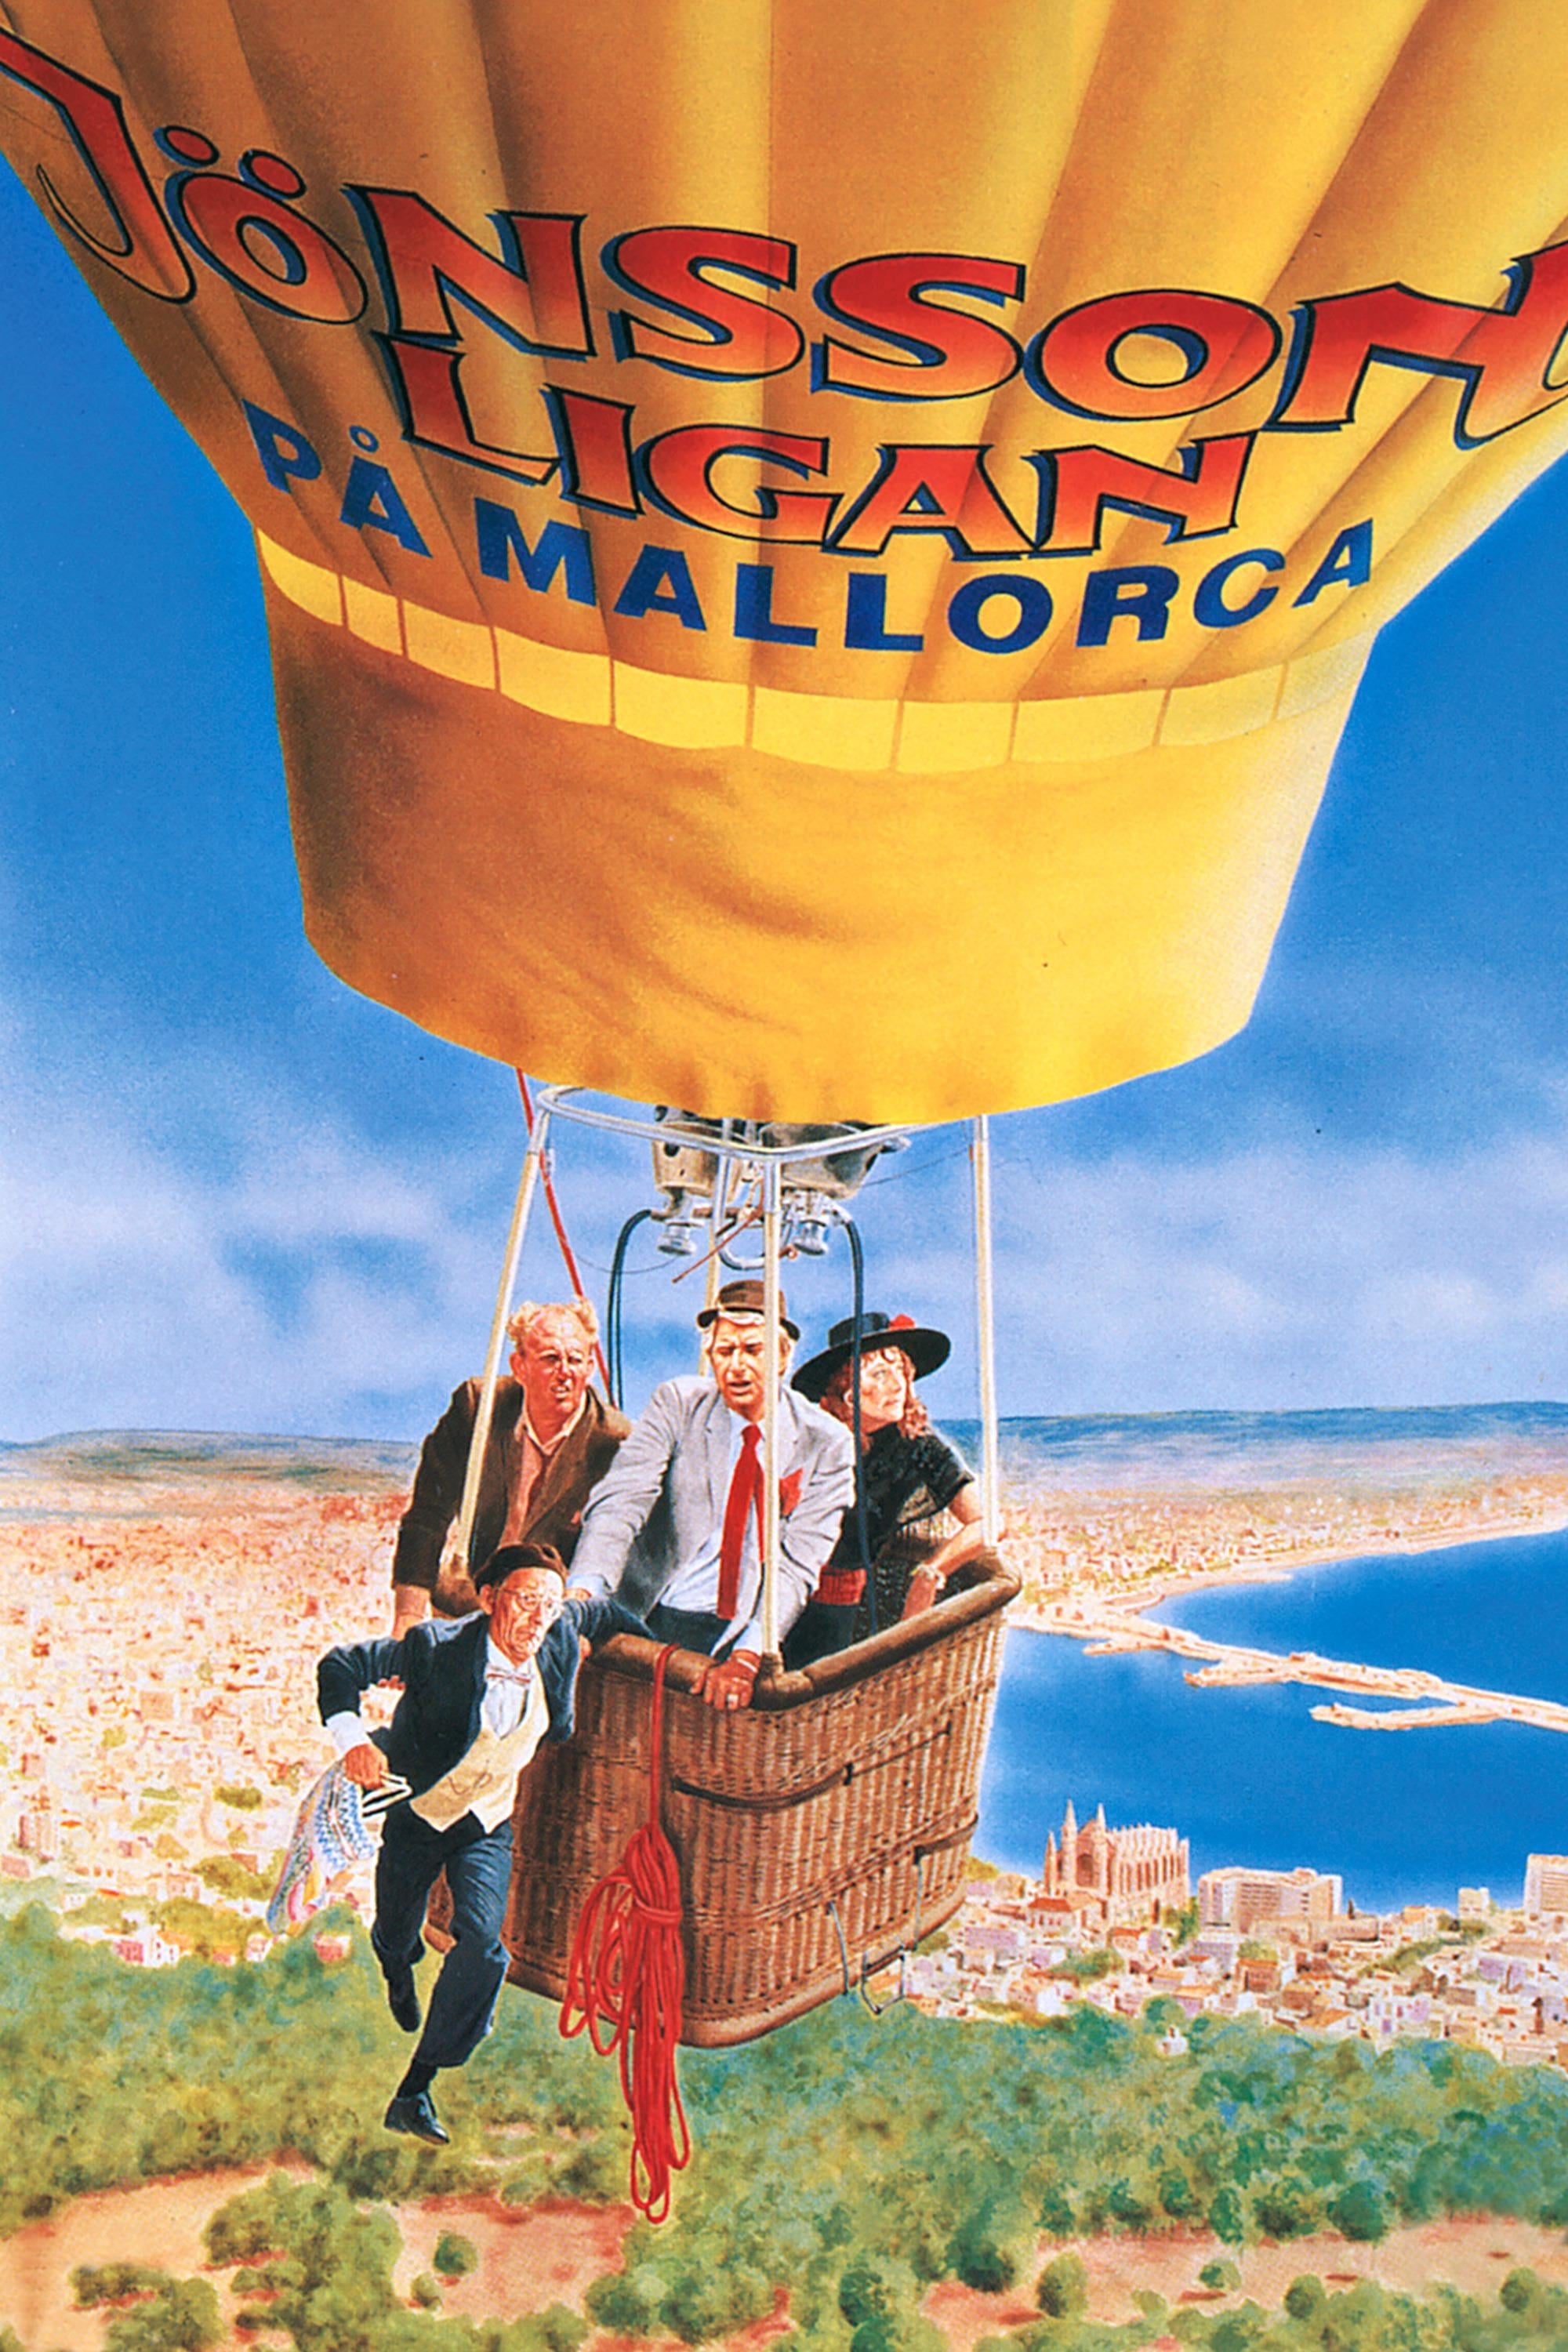 The Jonsson Gang in Mallorca (1989)